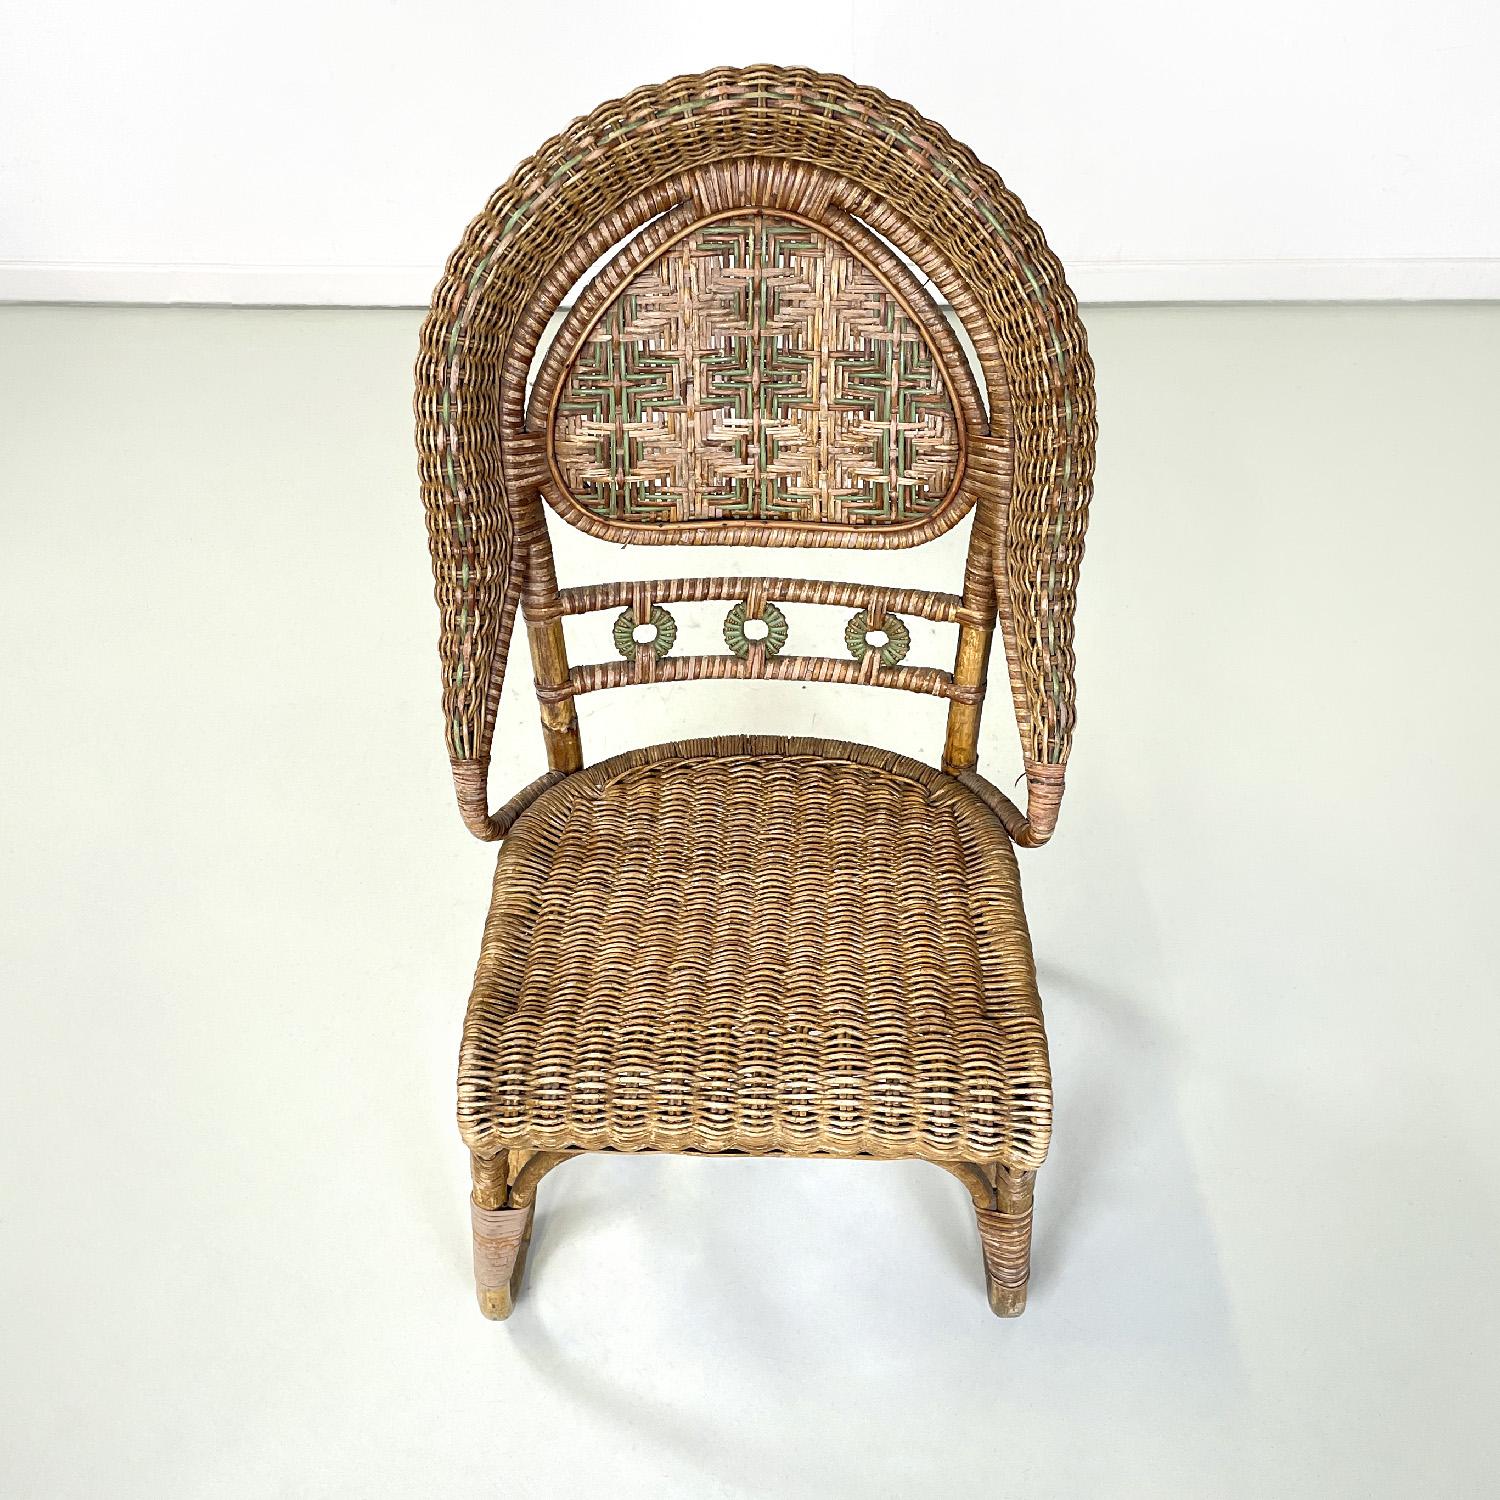 Italian antique rattan chairs by Mongiardino and Bonacina for Bonacina, 1900s For Sale 2